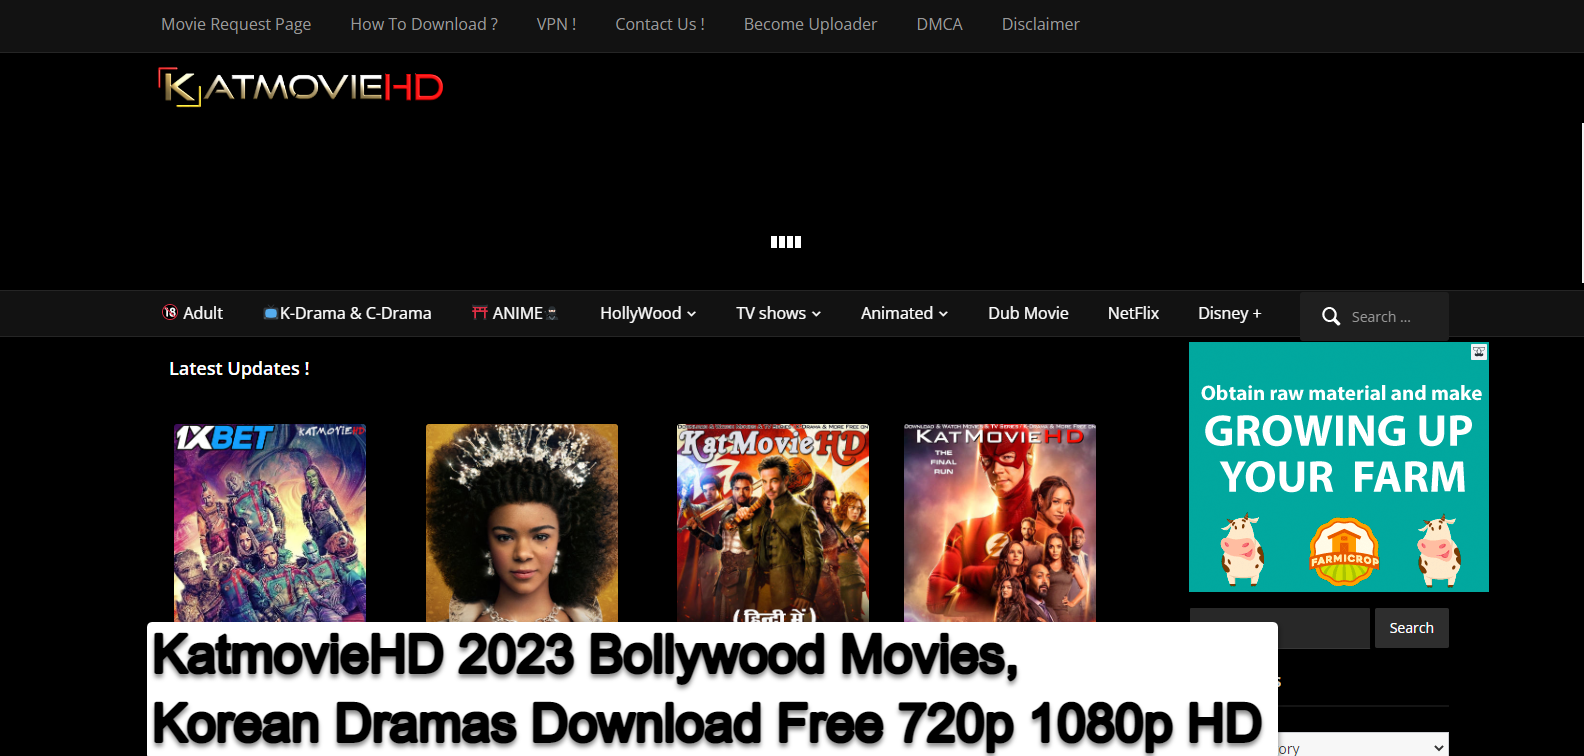 KatmovieHD 2023 Bollywood Movies, Korean Dramas Download Free 720p 1080p HD